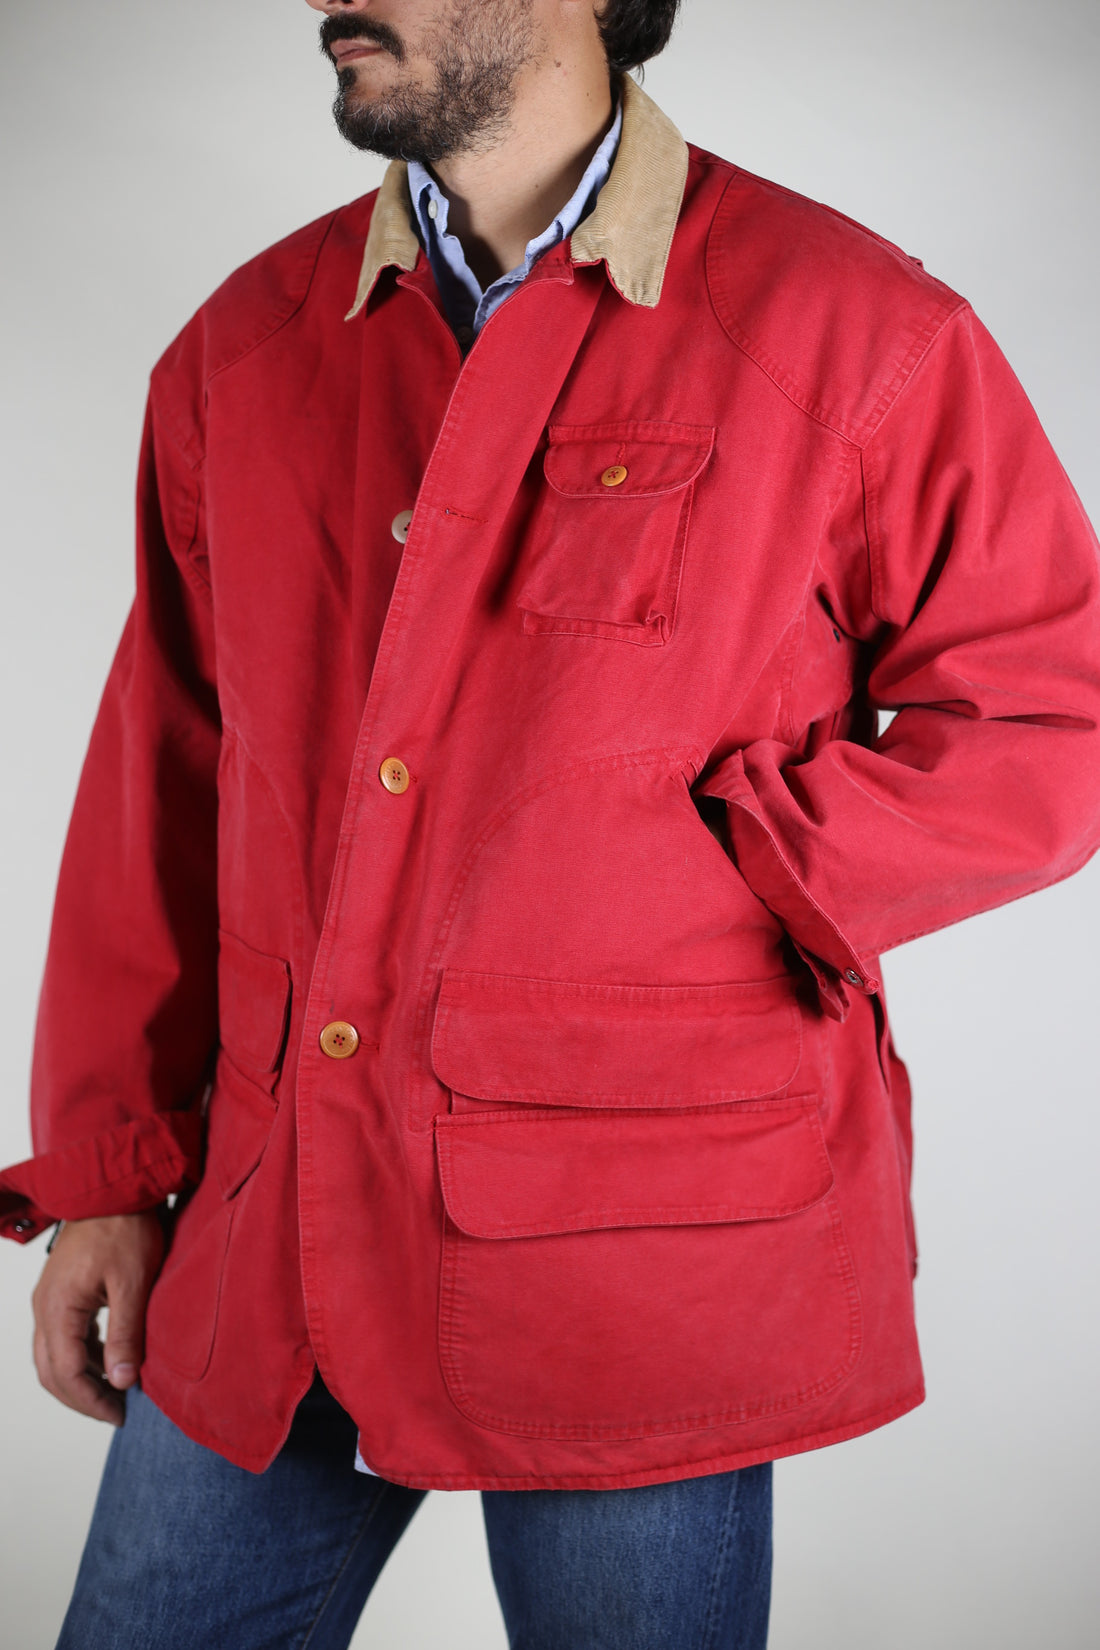 Vintage hunting jacket -XL-